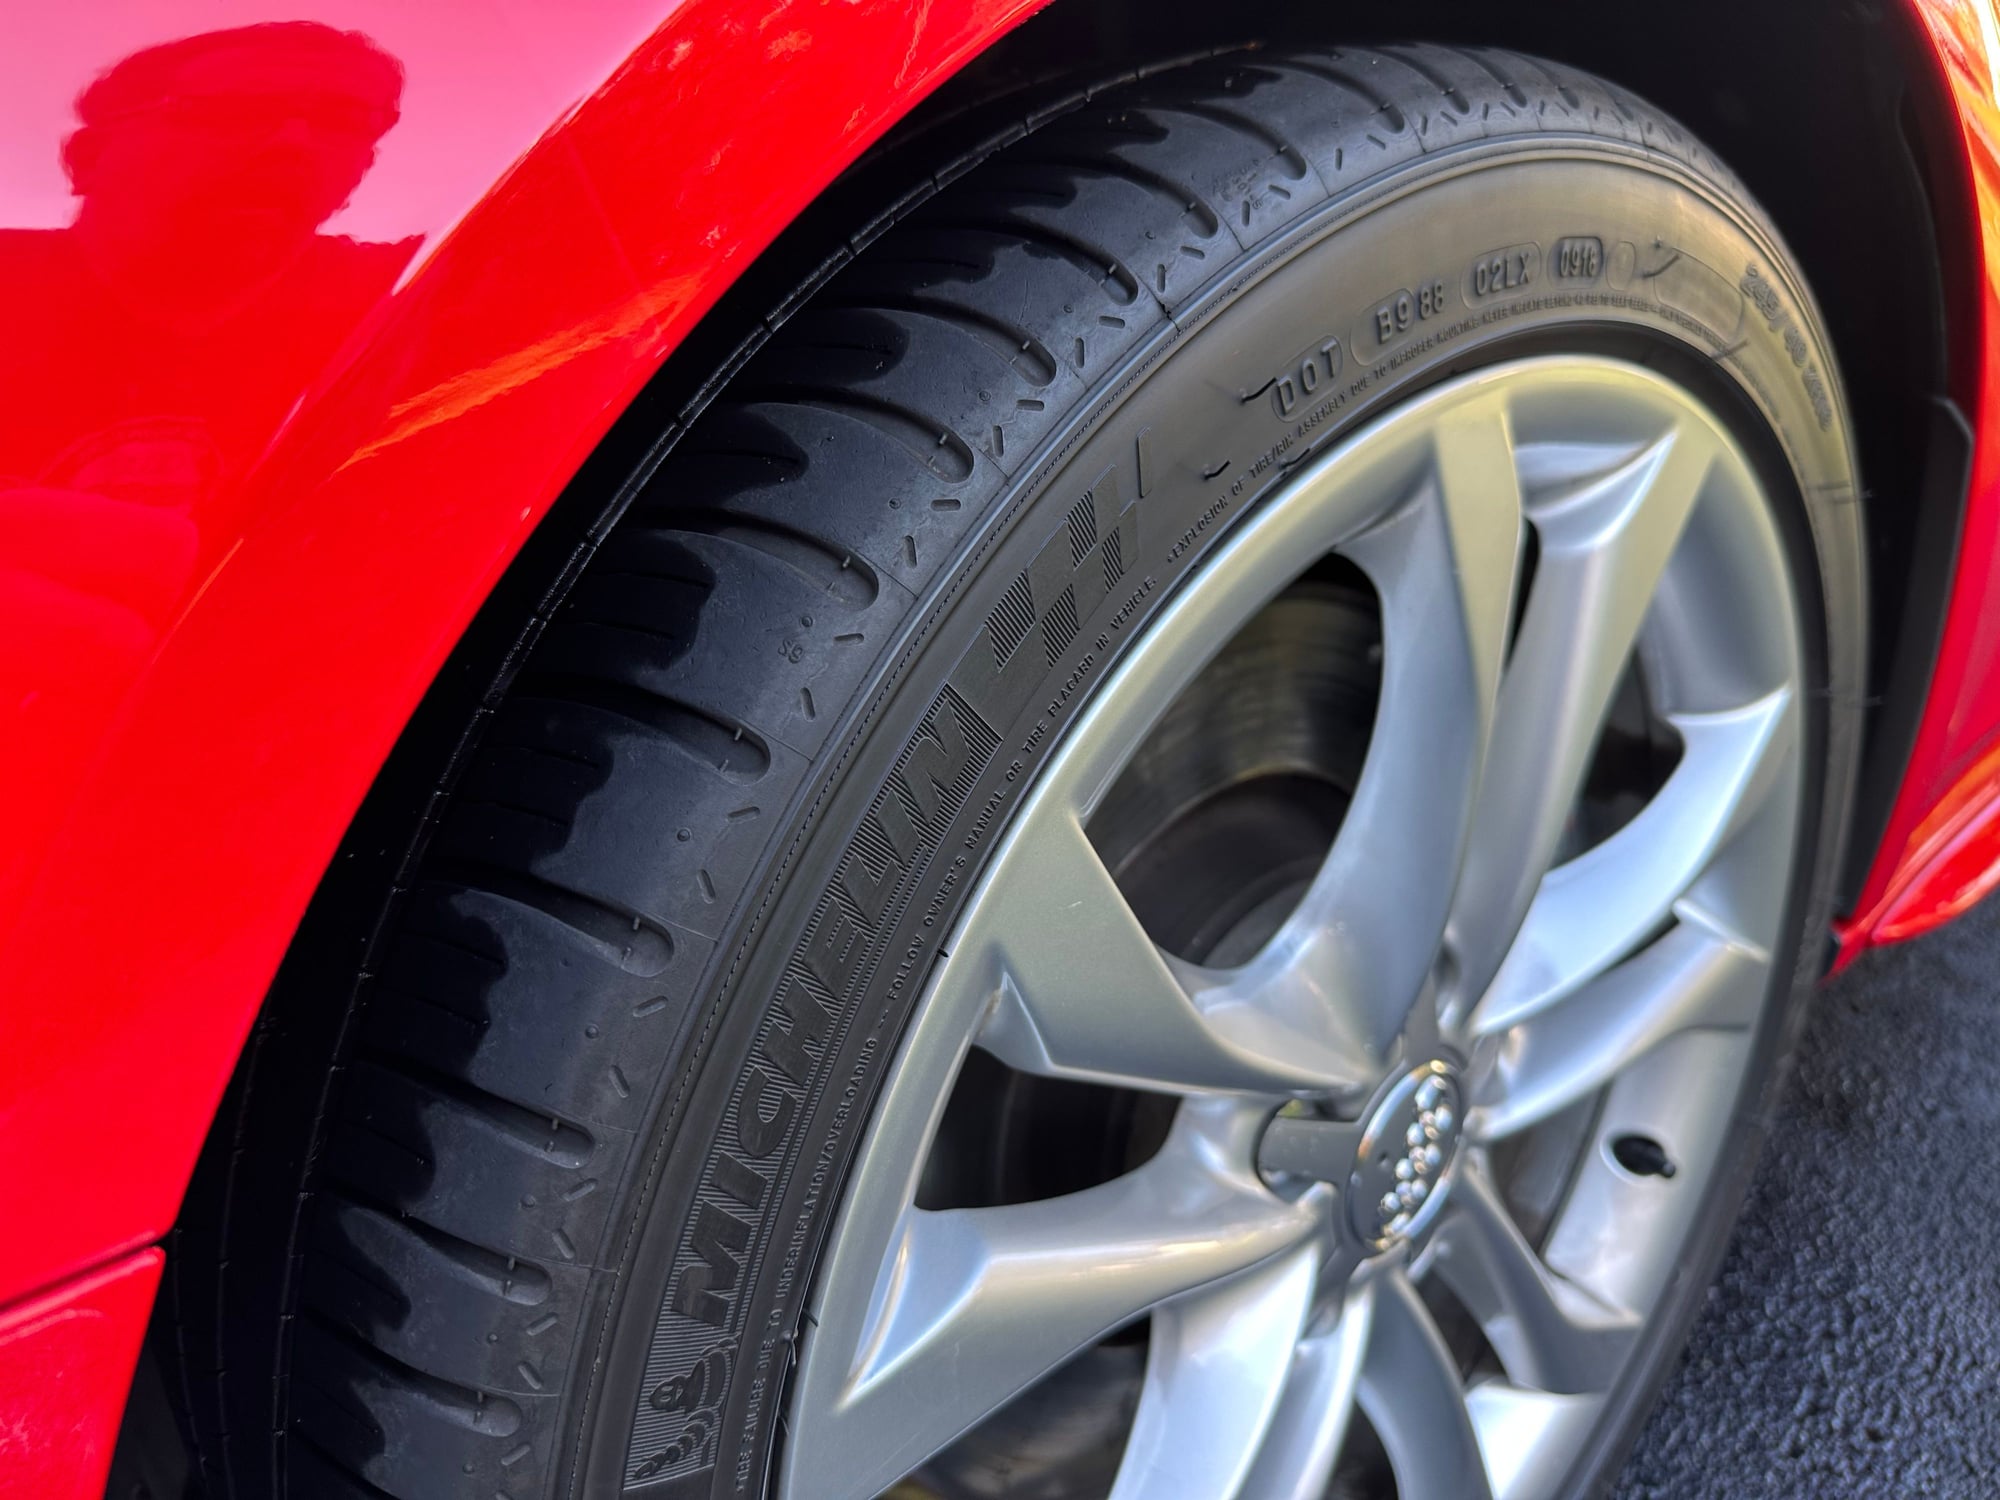 2015 Audi S4 - 2015 S4 Misano Red - Low Miles - Used - VIN WAUBGAFL9FA056434 - 50,600 Miles - 6 cyl - AWD - Sedan - Red - Endicott, NY 13760, United States